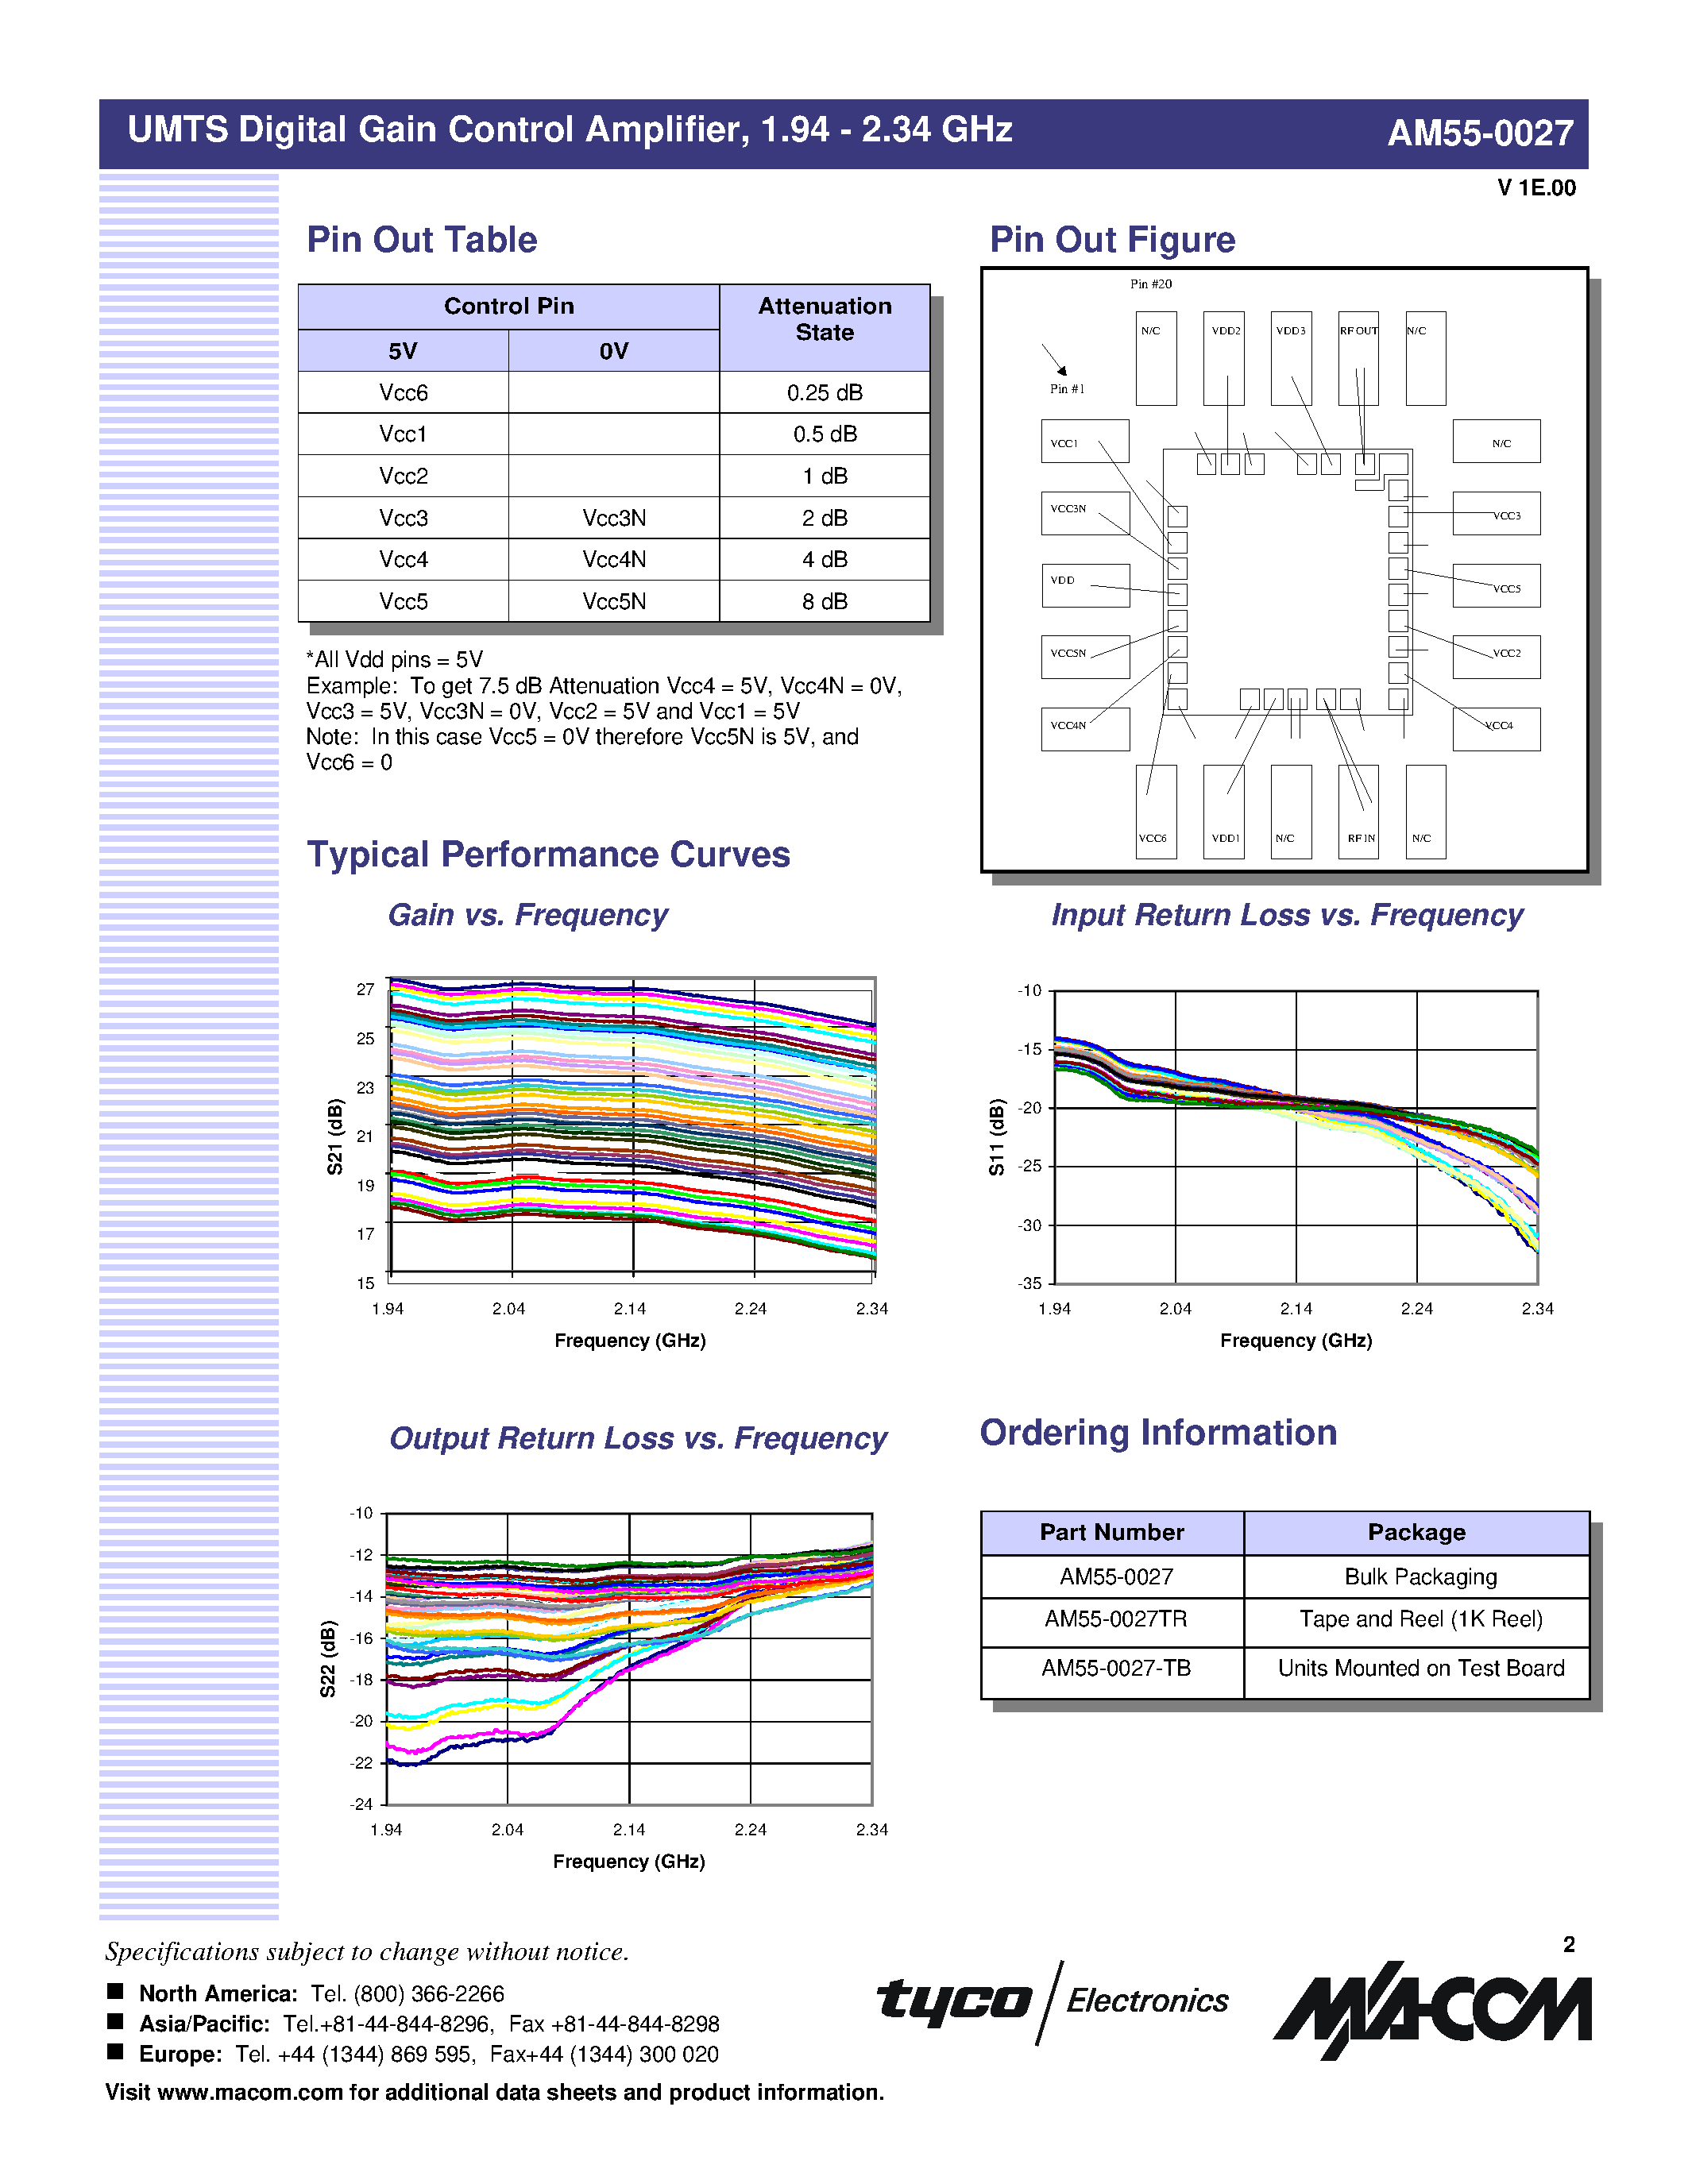 Datasheet AM55-0027 - UMTS Digital Gain Control Amplifier/ 1.94 - 2.34 GHz page 2